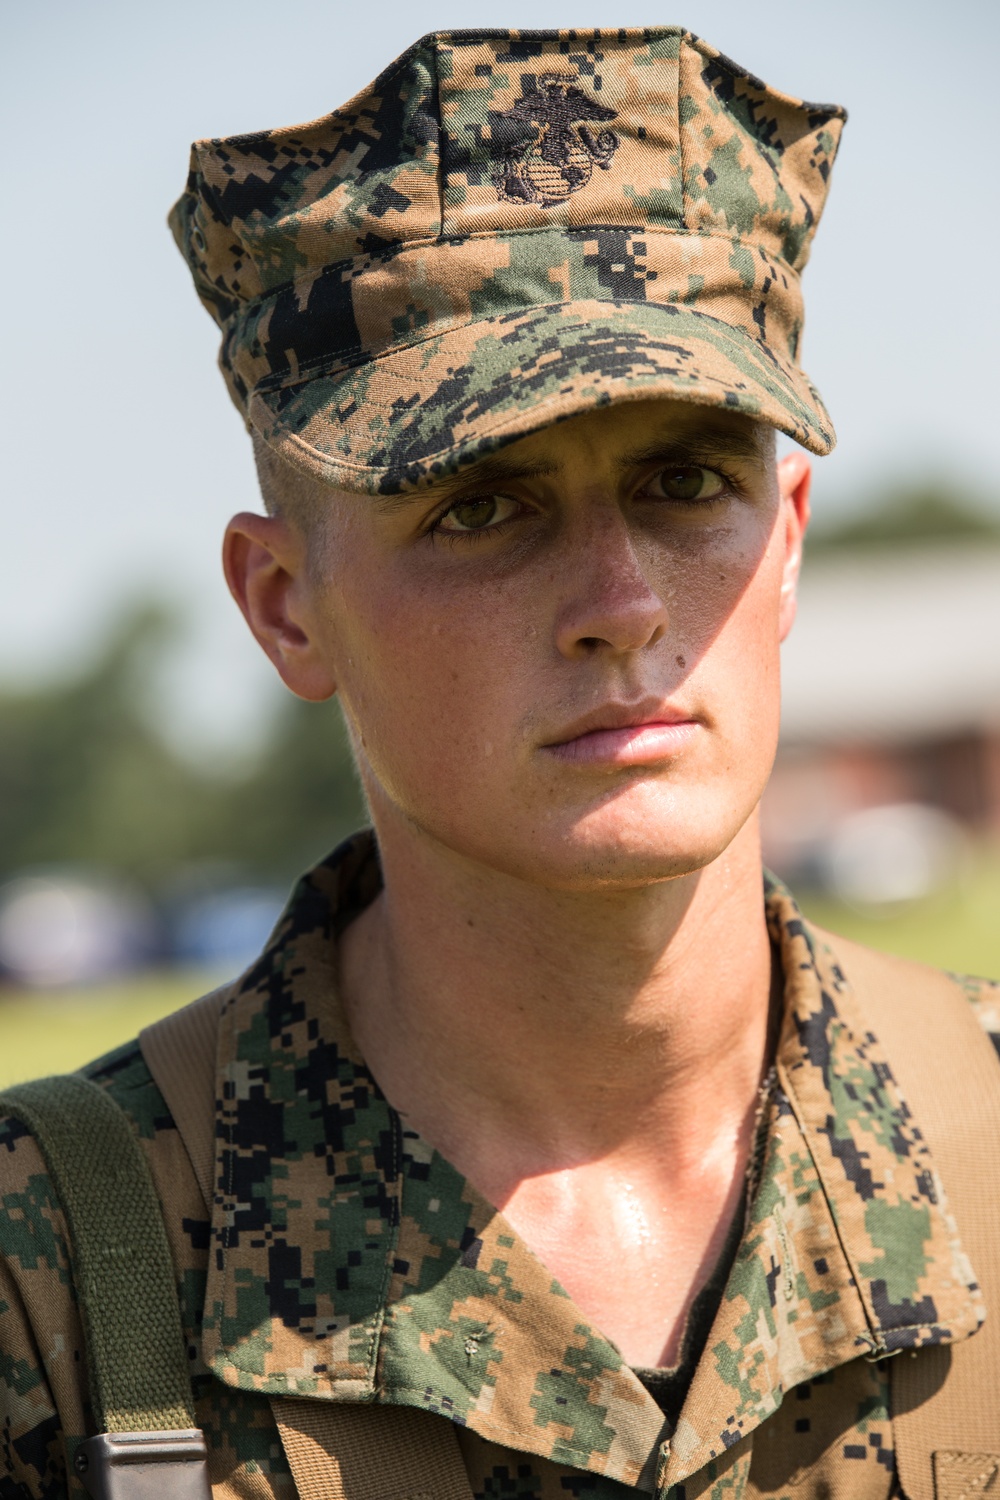 Tampa, Fla., native training at Parris Island to become U.S. Marine